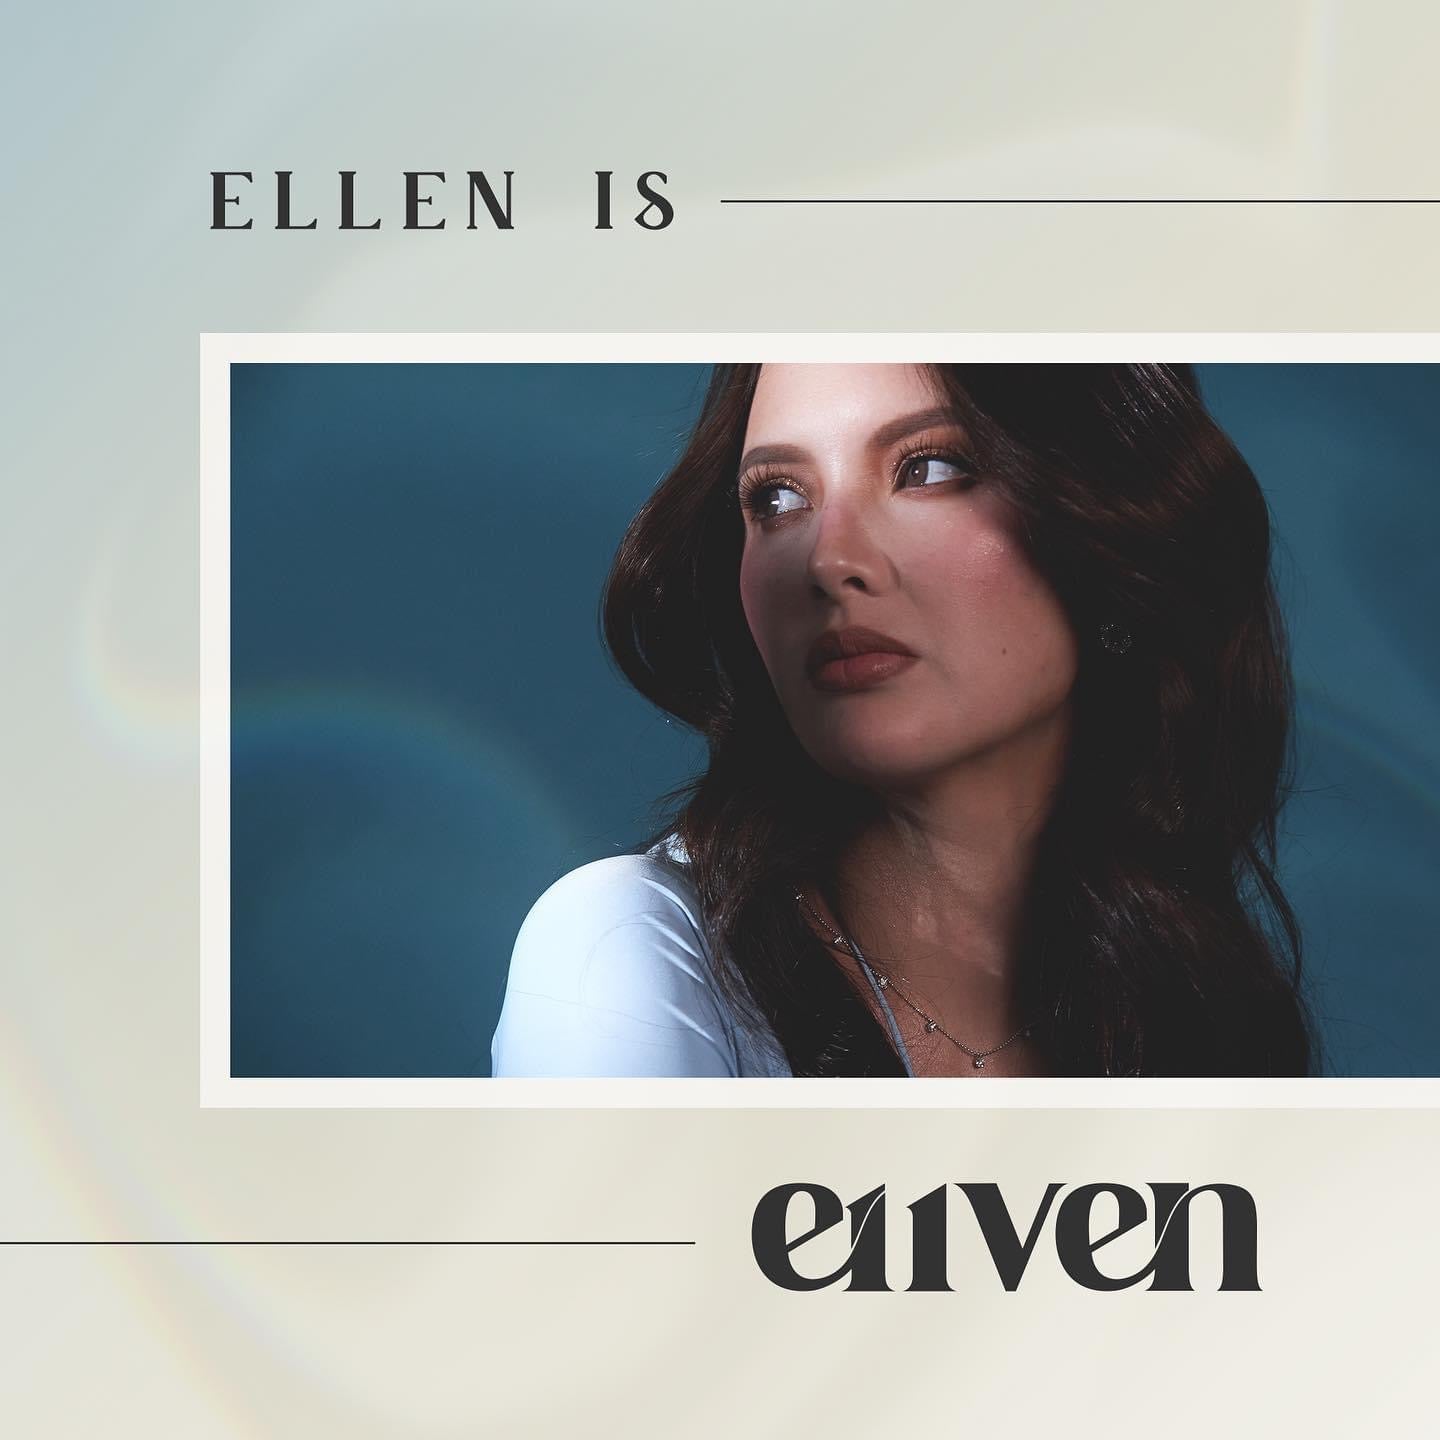 e11ven Premium Gluta by Ellen Adarna